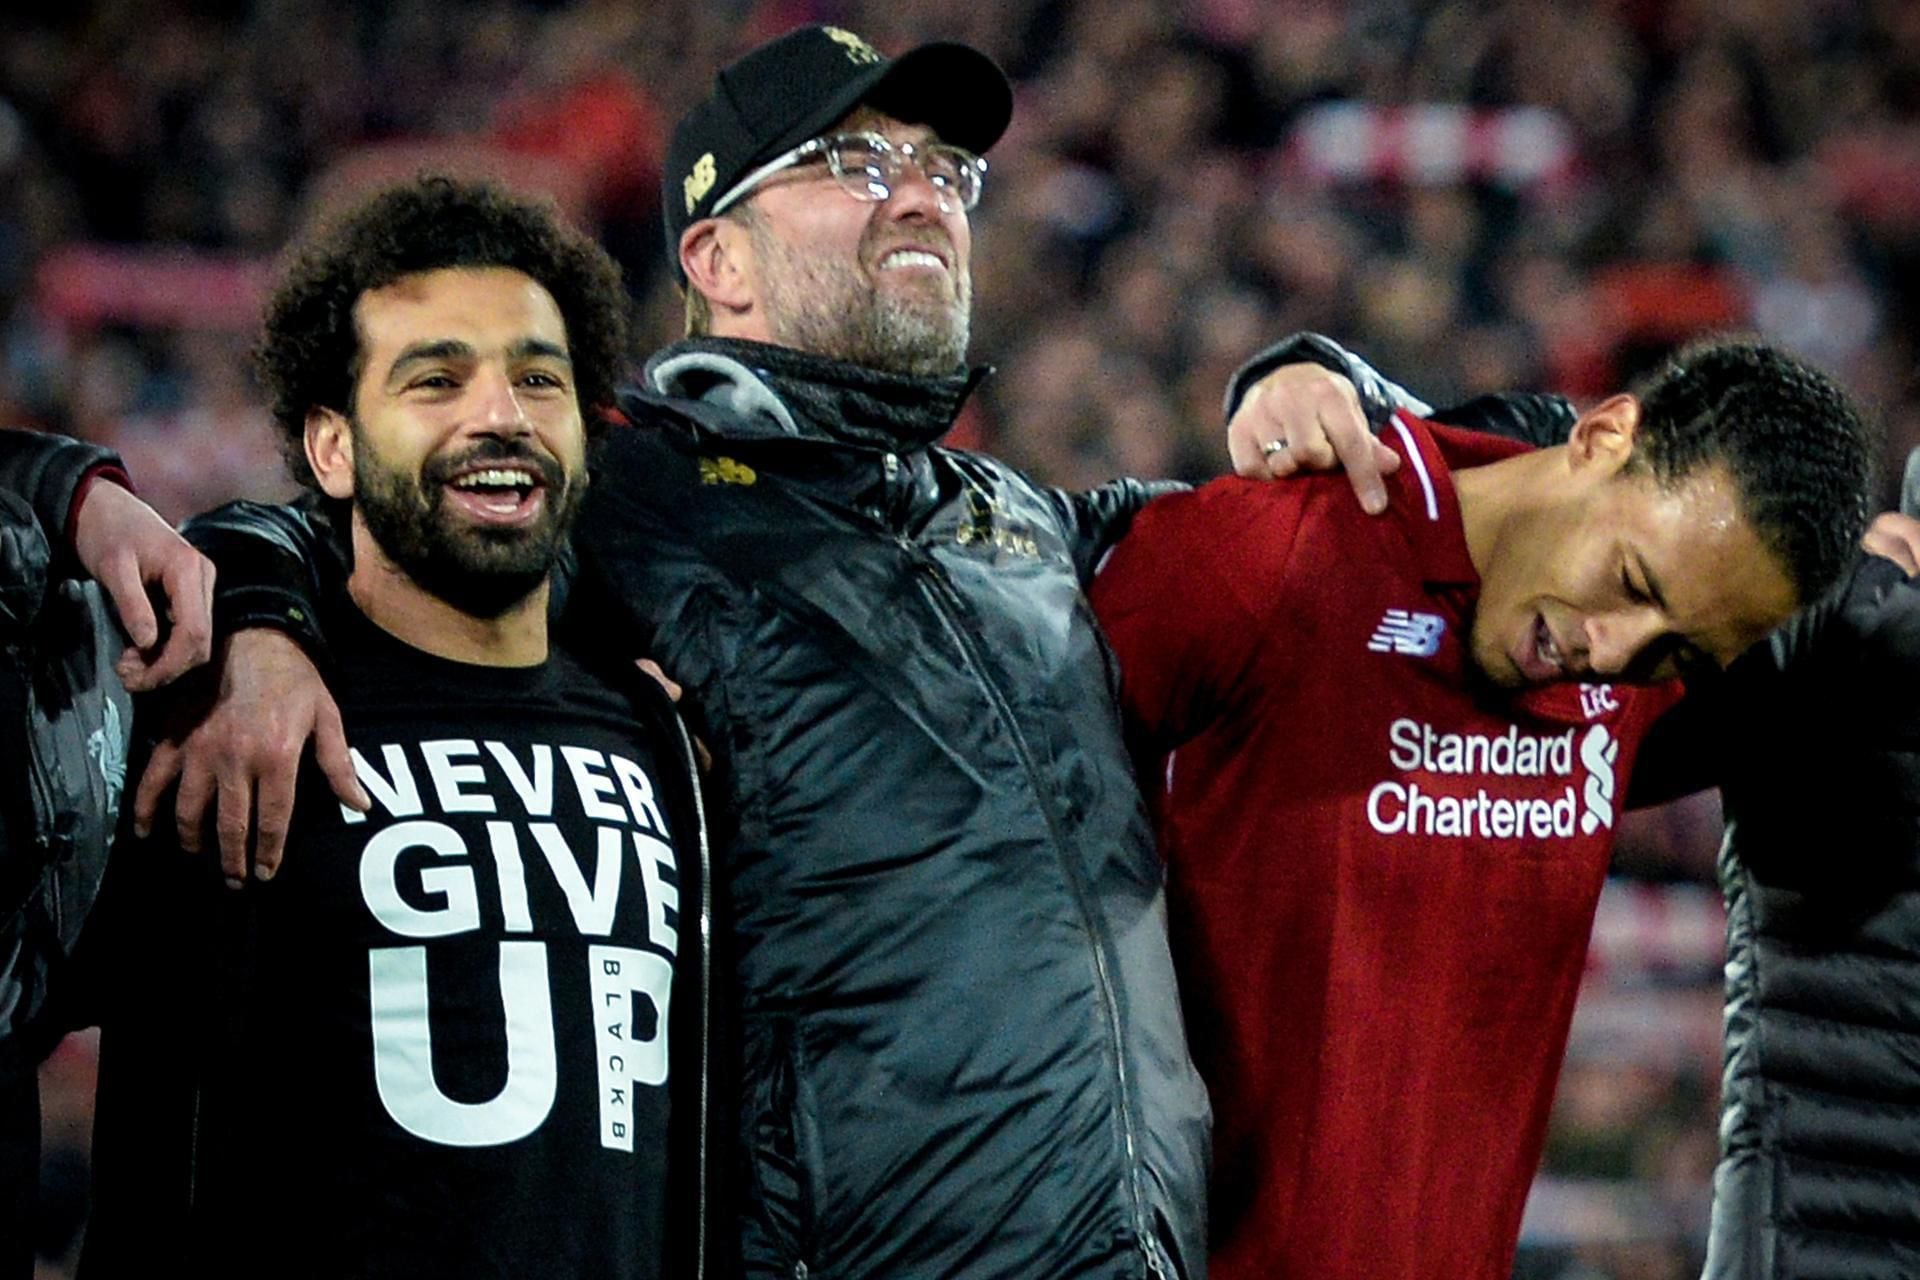 Mohamed 'Never Give Up' T-shirt epitomises Liverpool's spirit victory